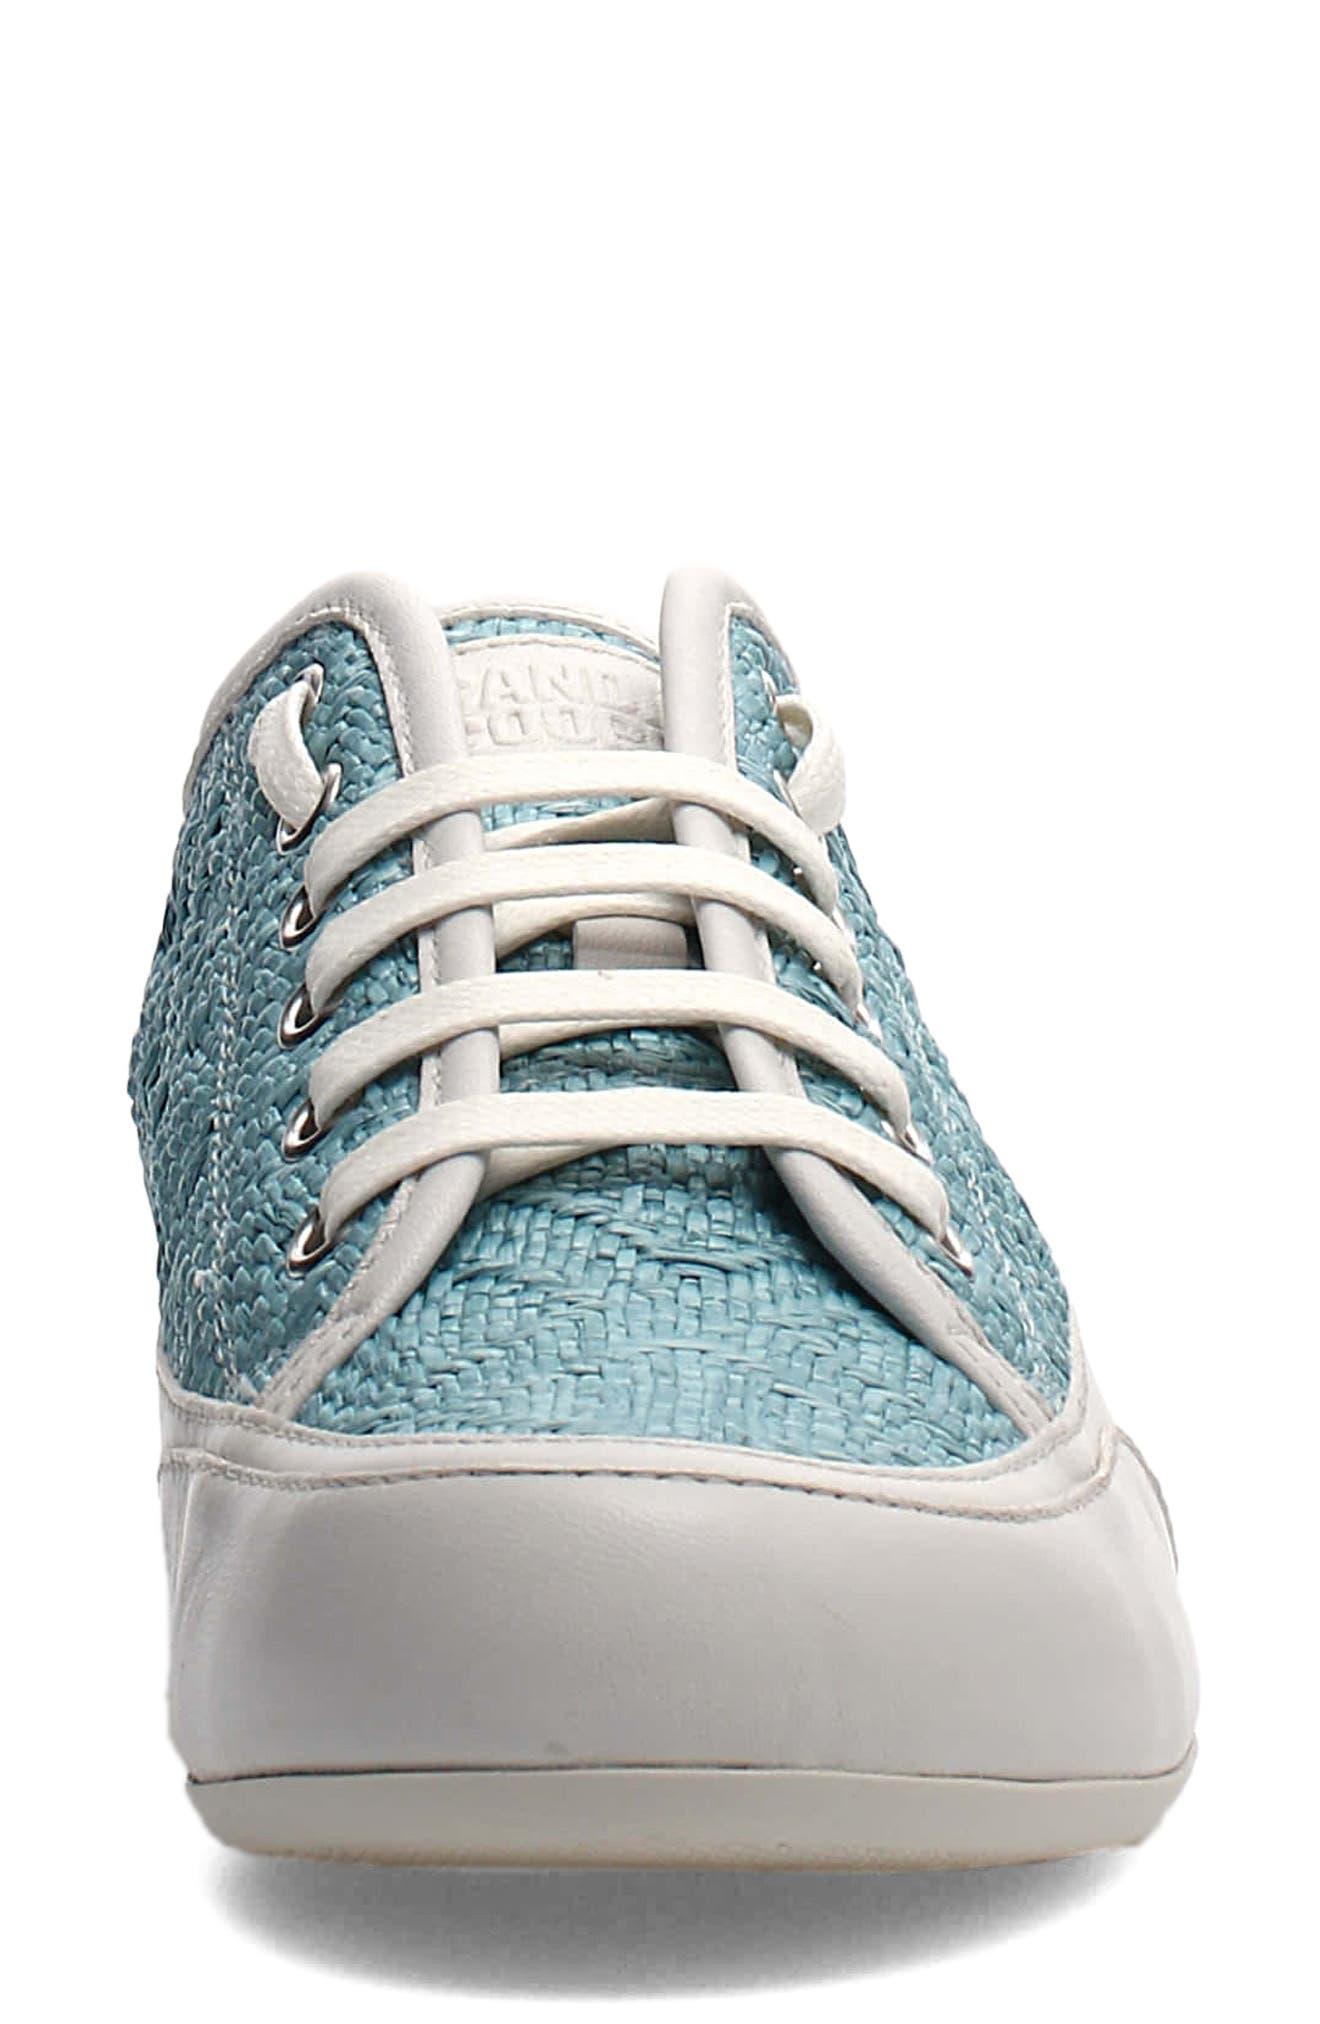 Candice Cooper Rock Low Top Sneaker in Blue | Lyst